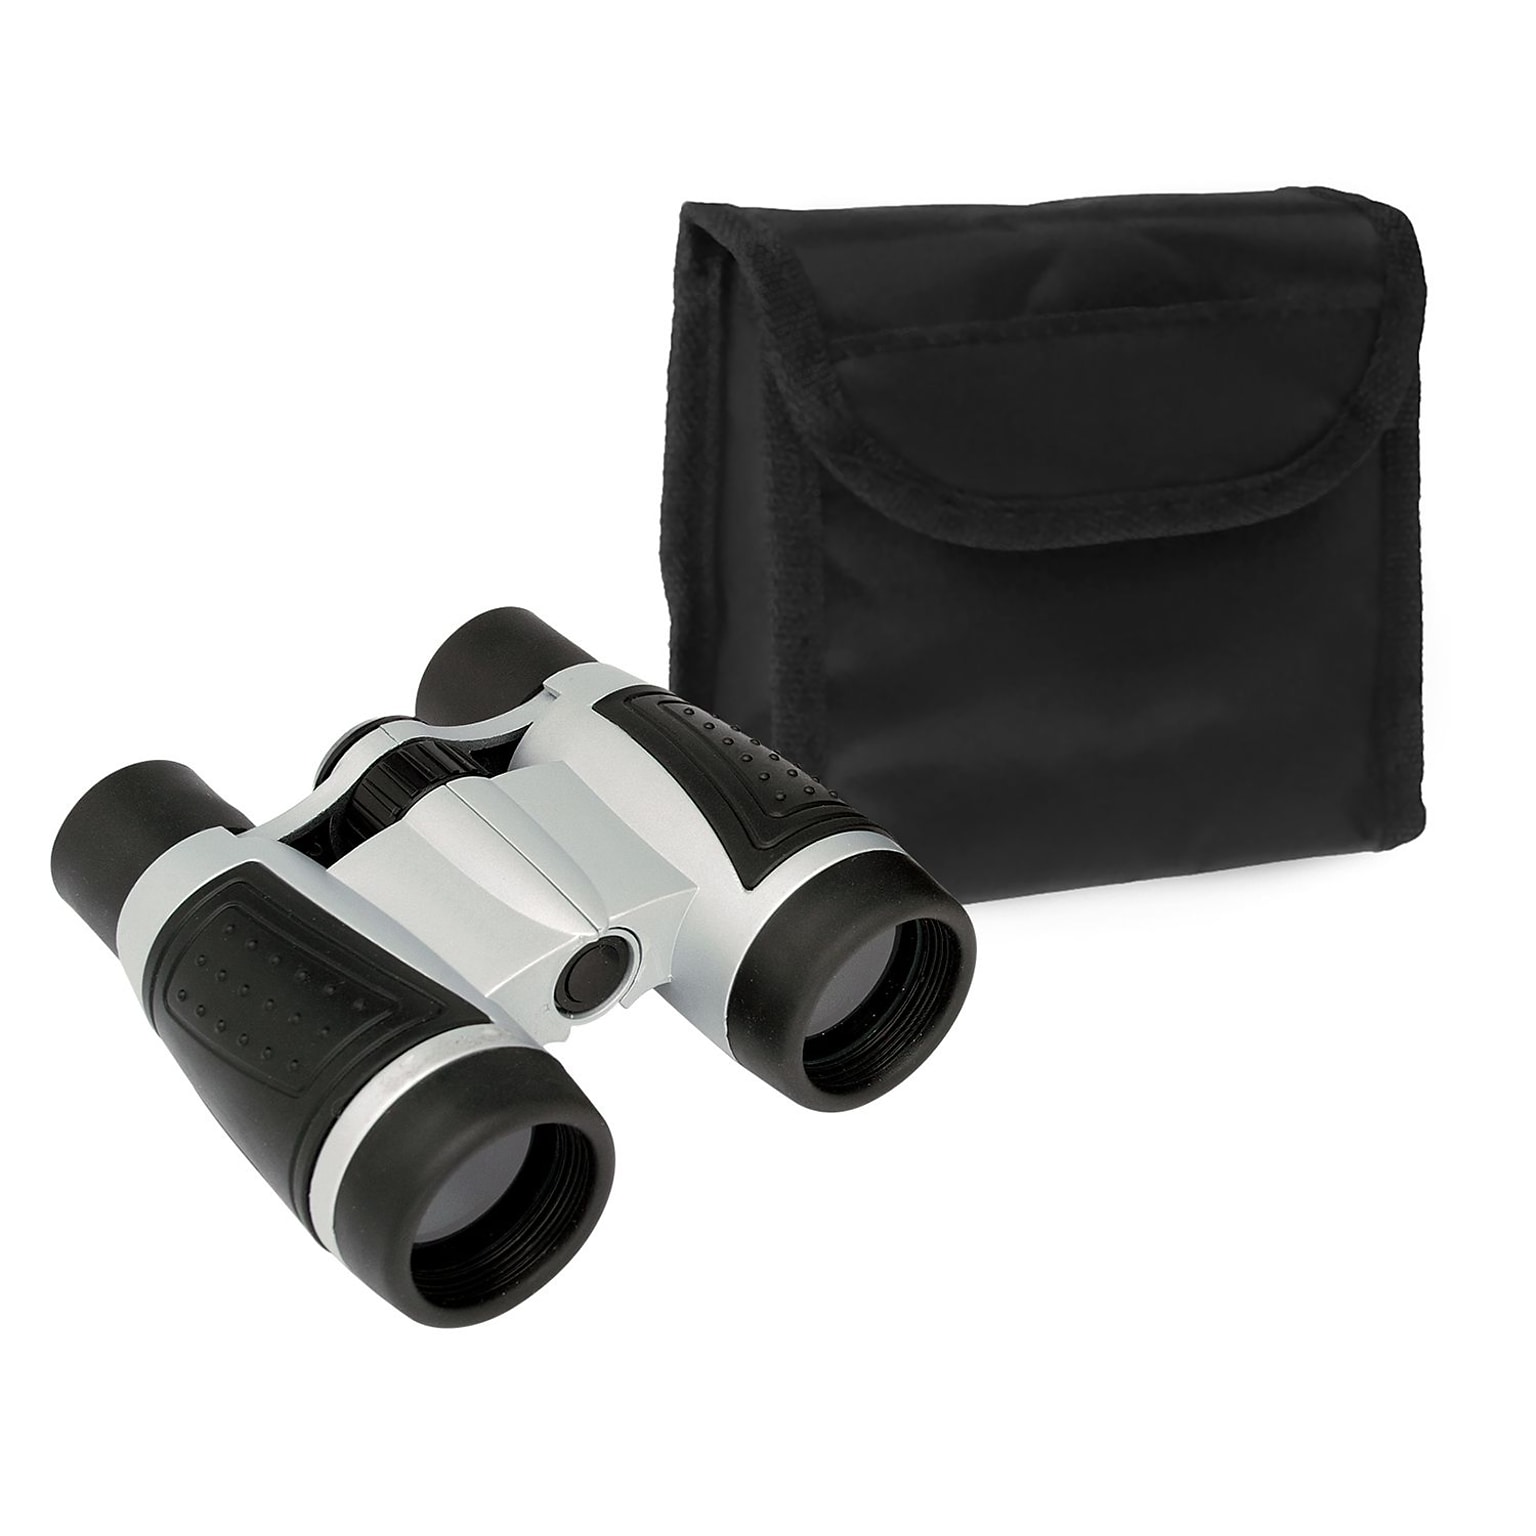 Natico Black and Silver ABS Binoculars, 5 X 30 (60-BC-530)